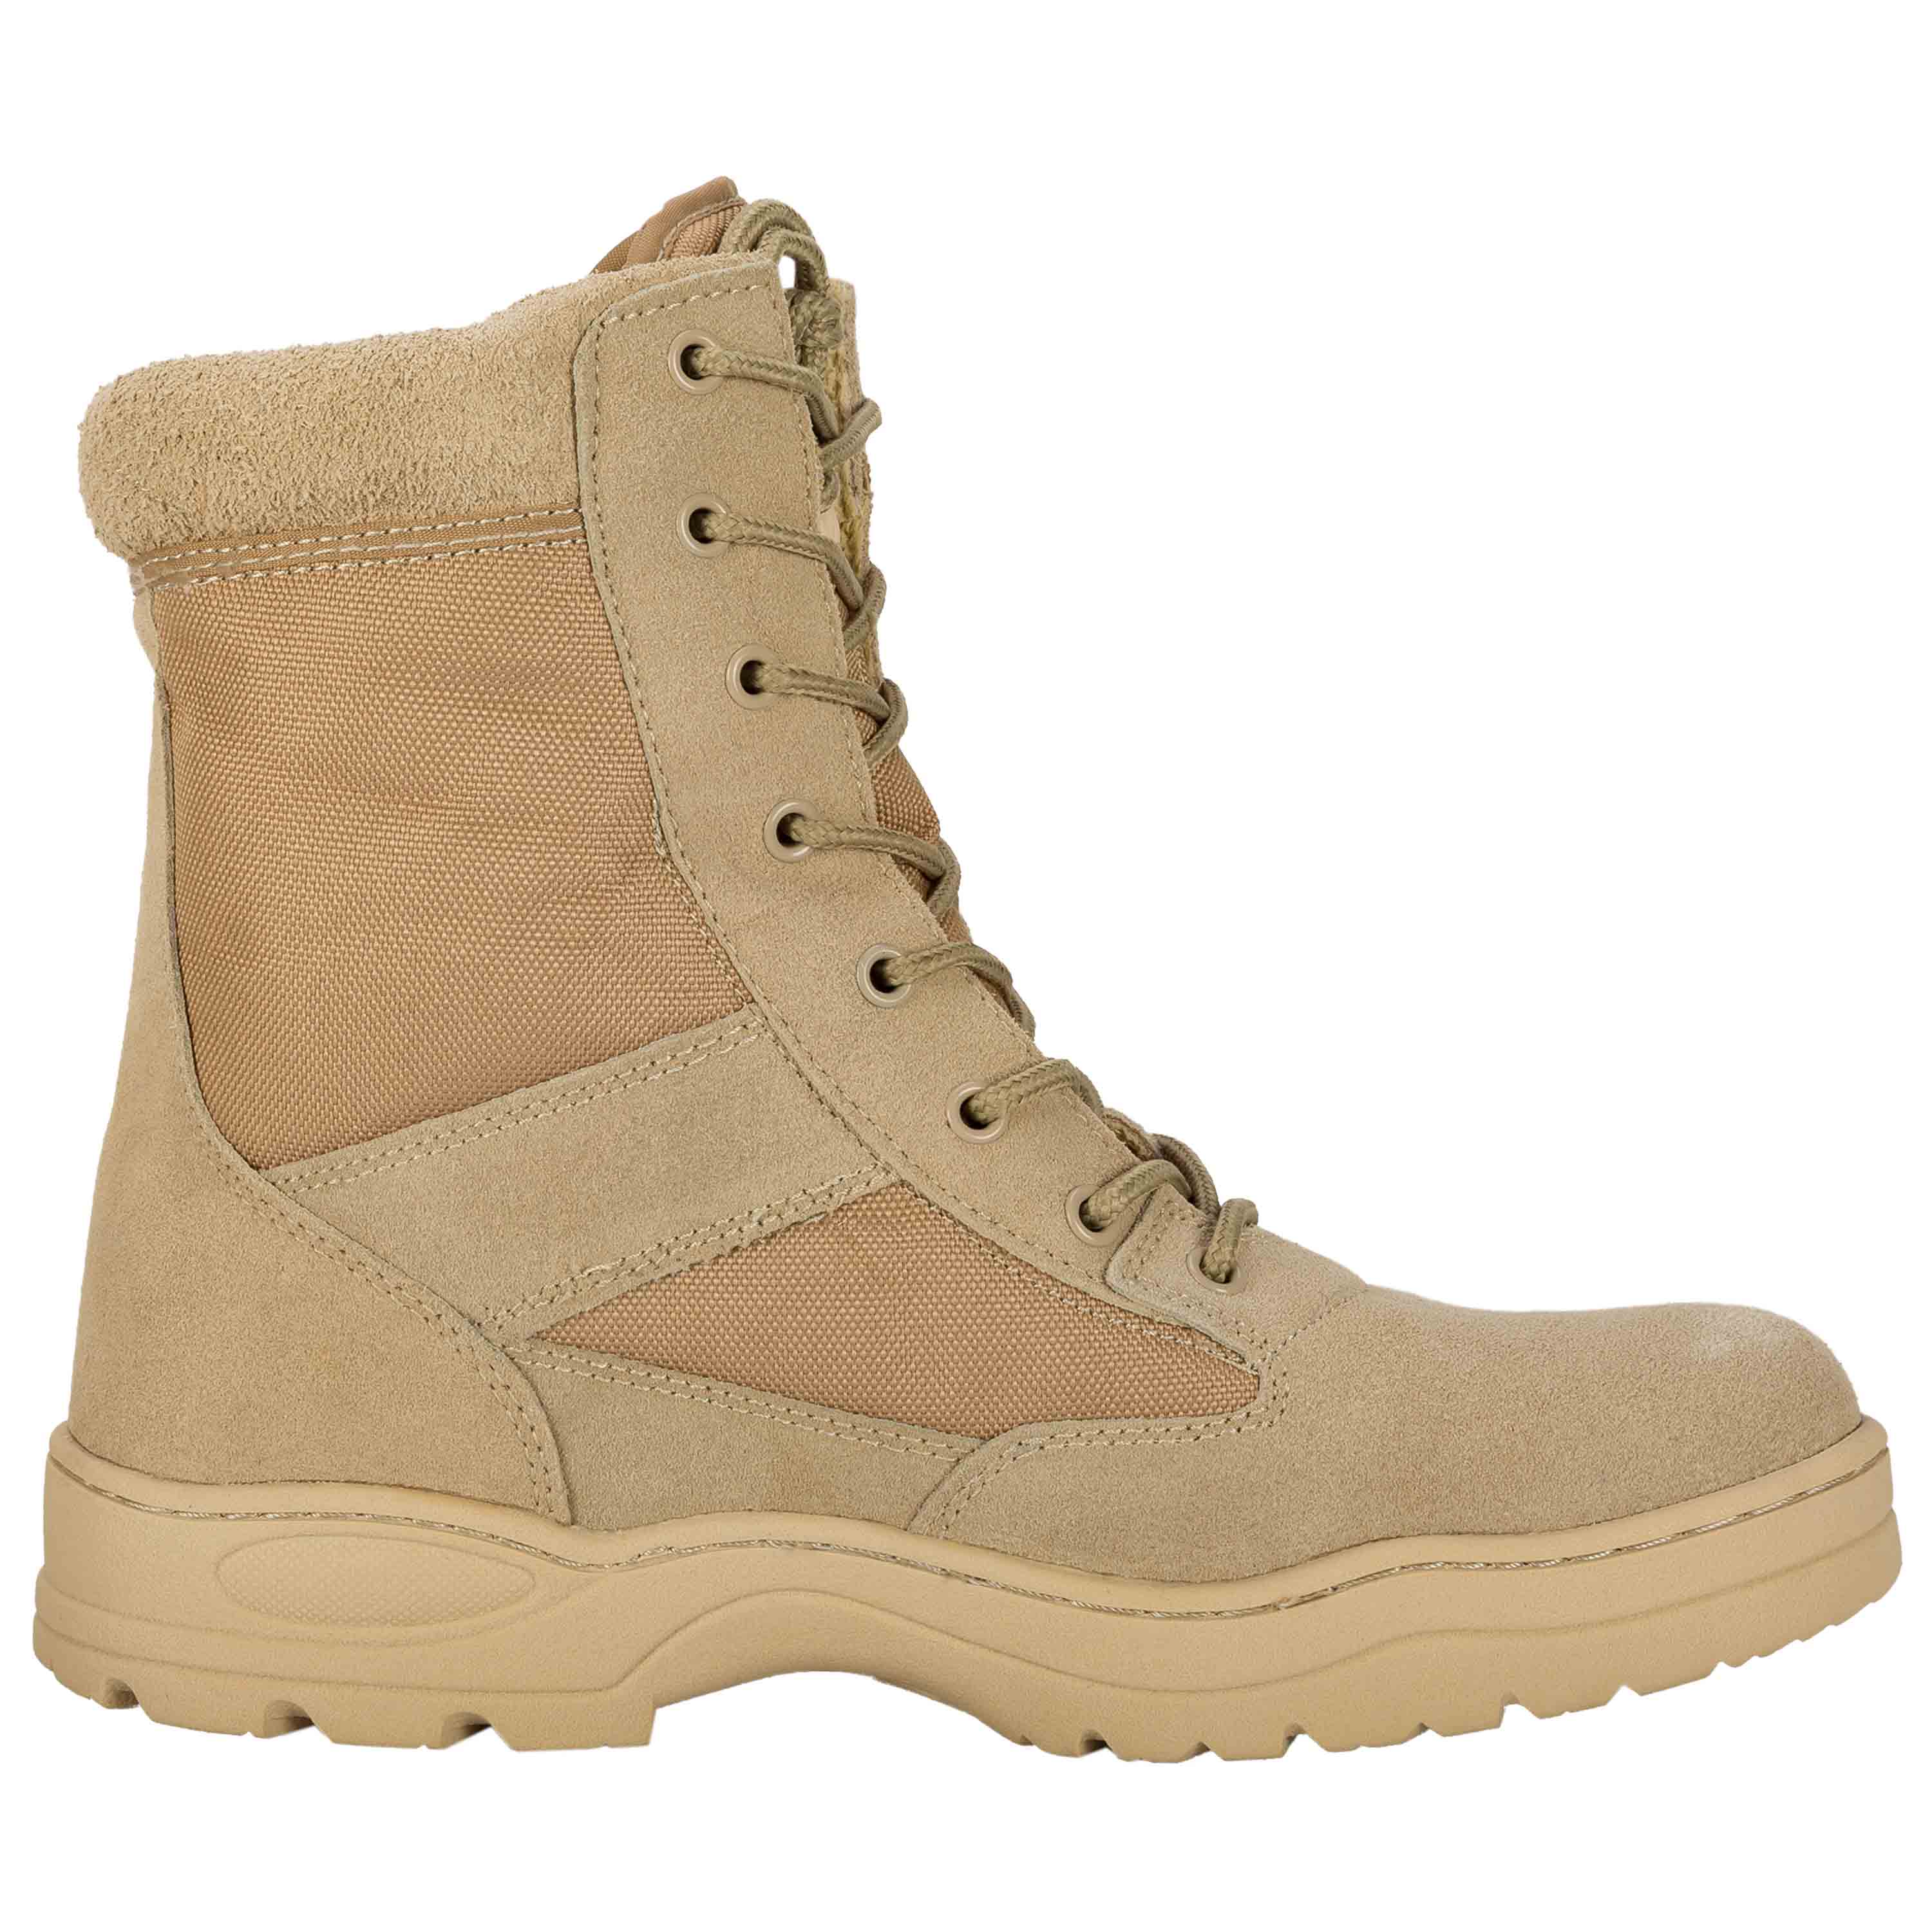 Purchase the Outdoor Safari Boots khaki by ASMC